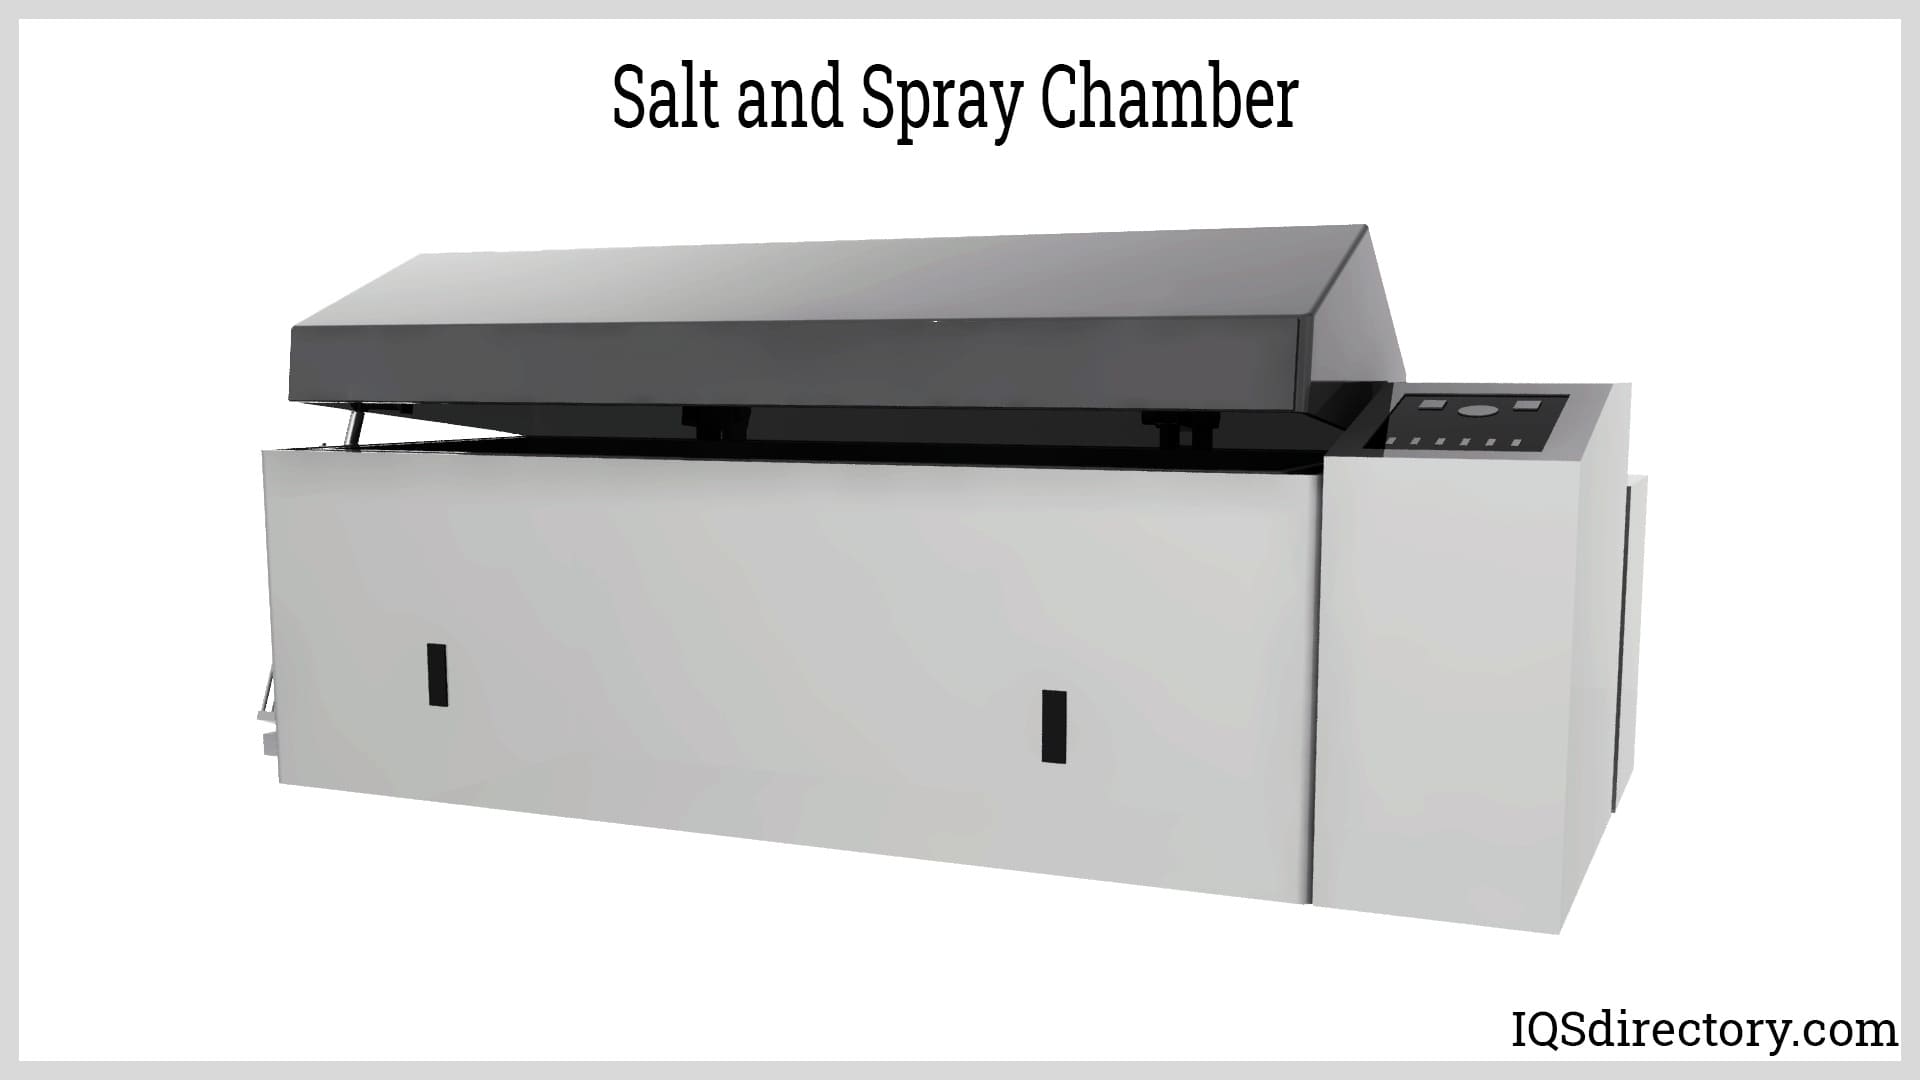 Salt and Spray Chamber